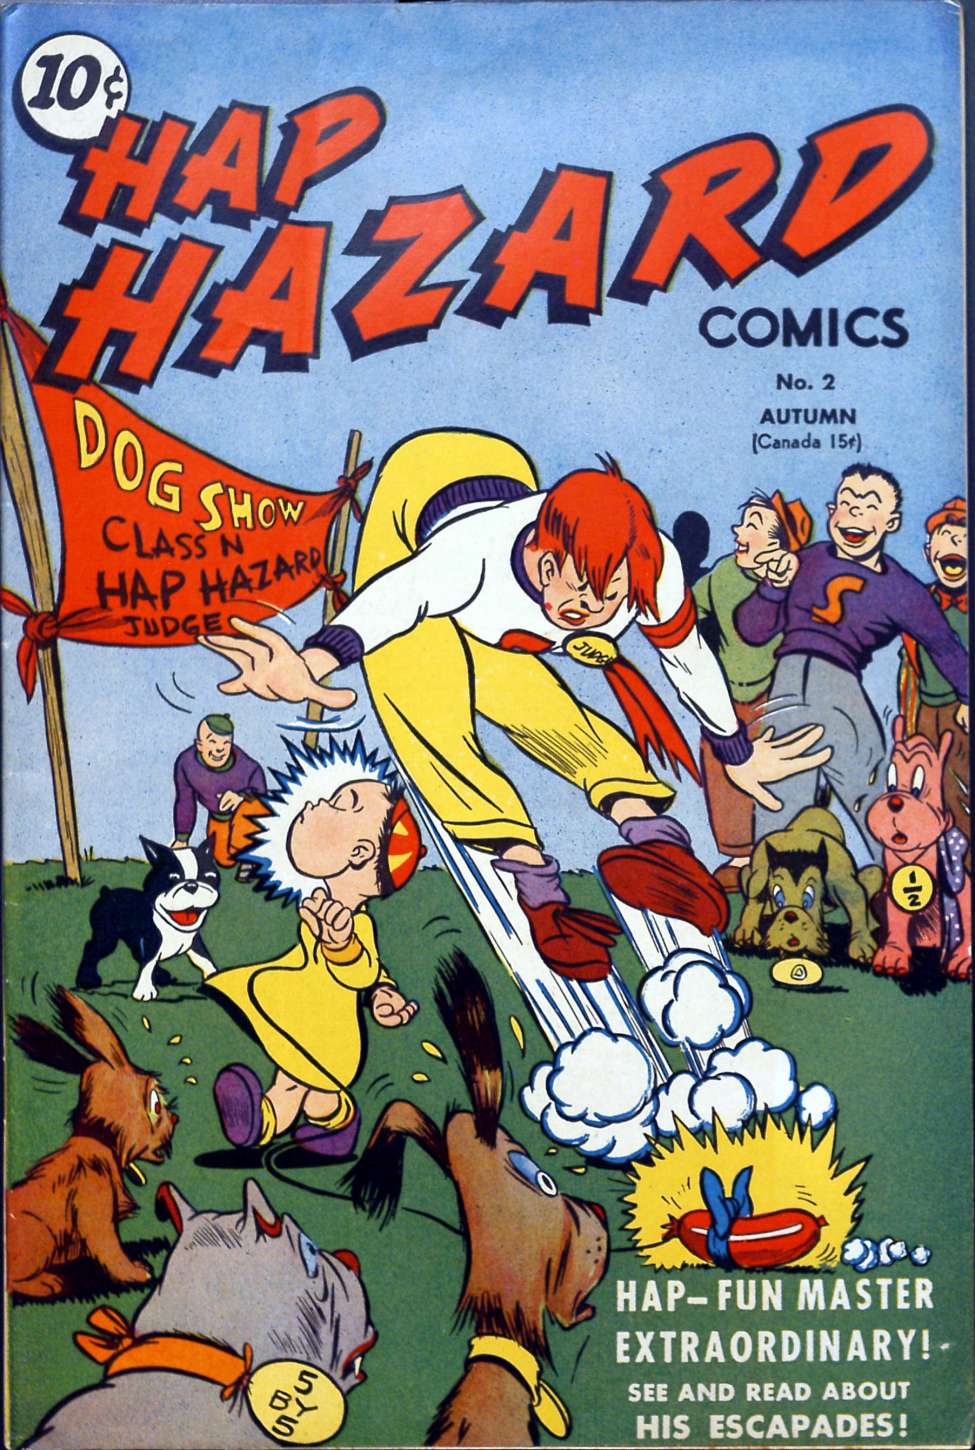 Book Cover For Hap Hazard Comics 2 (alt) - Version 2